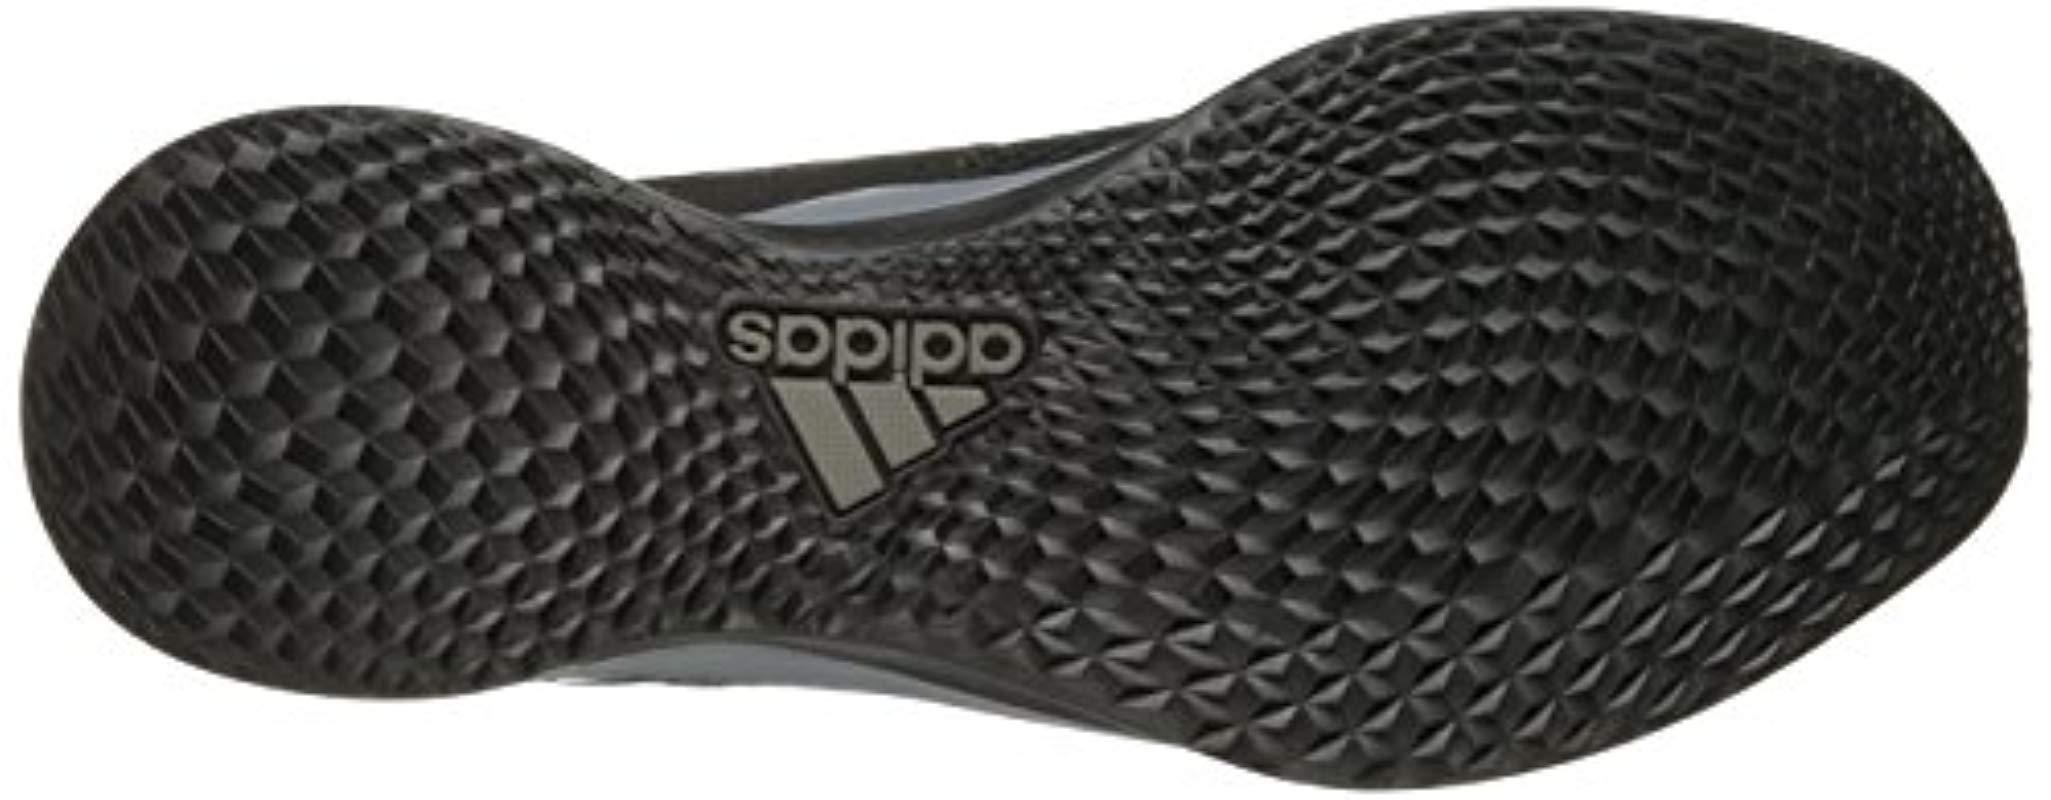 adidas men's speed 3.0 cross trainer